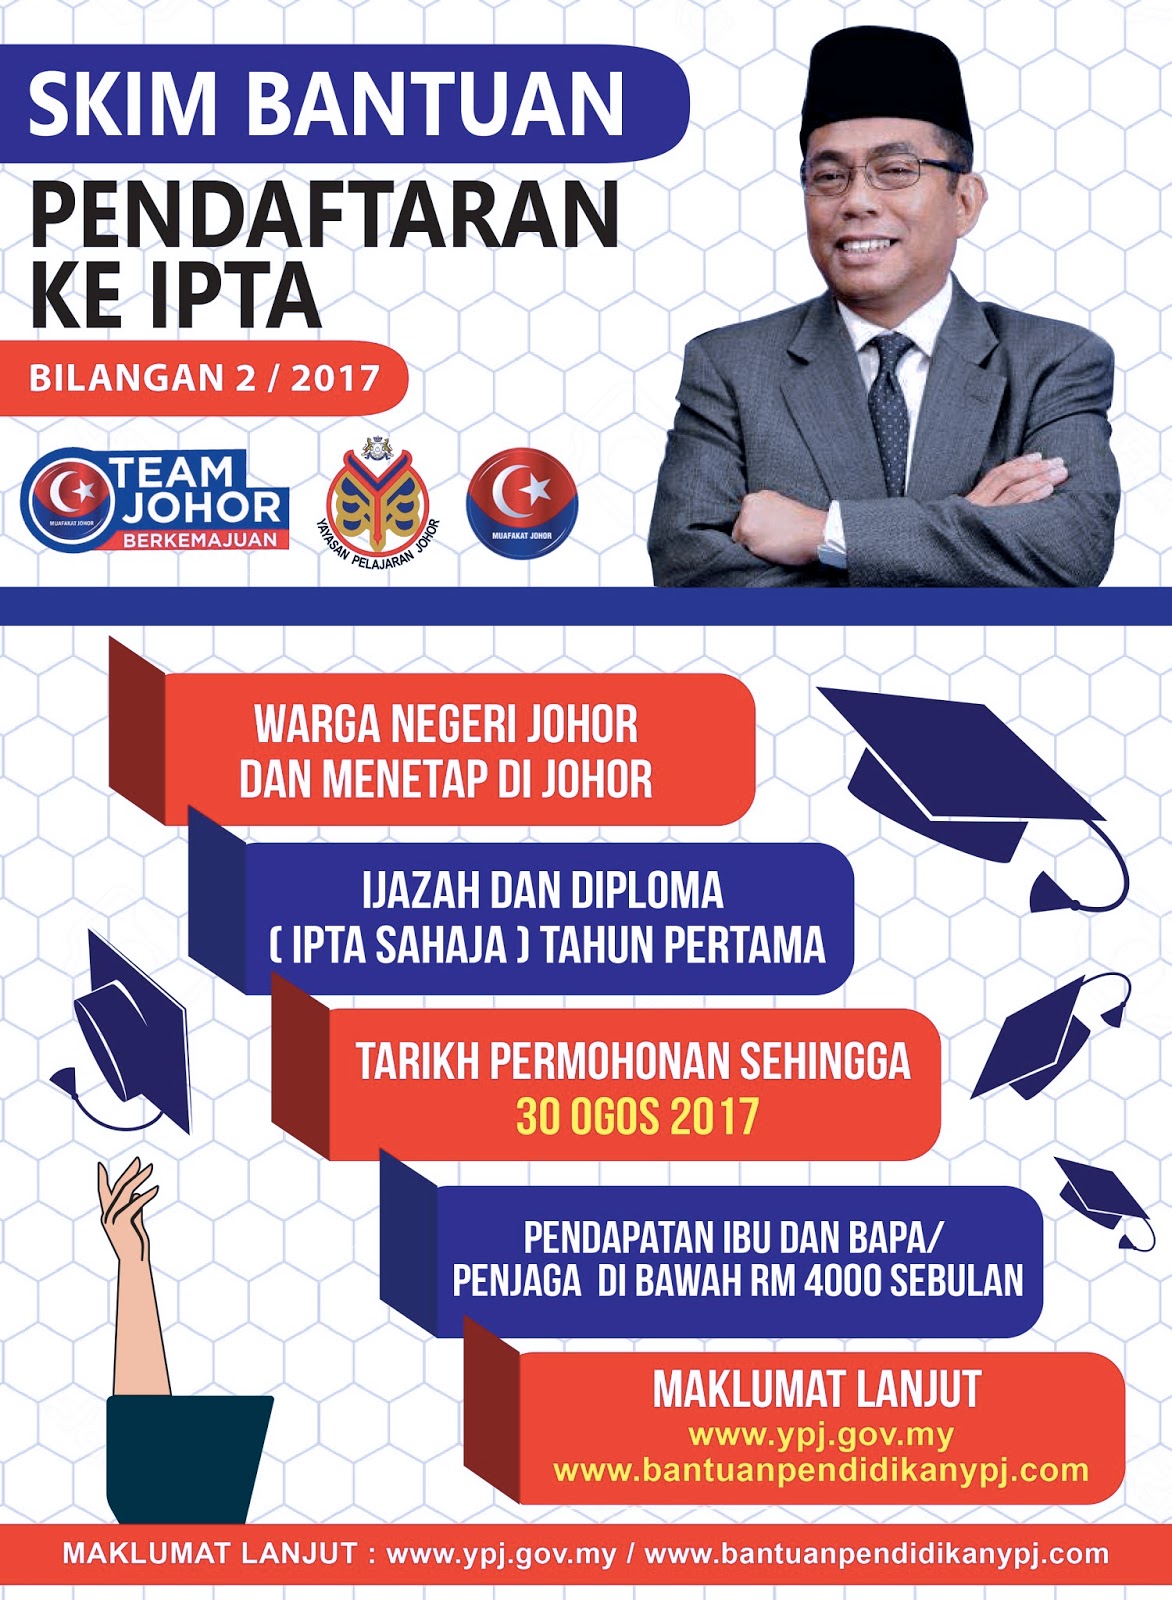 Skim Bantuan Pendaftaran Ipta 2017 Ijazah Diploma Pertubuhan Mahasiswa Johor